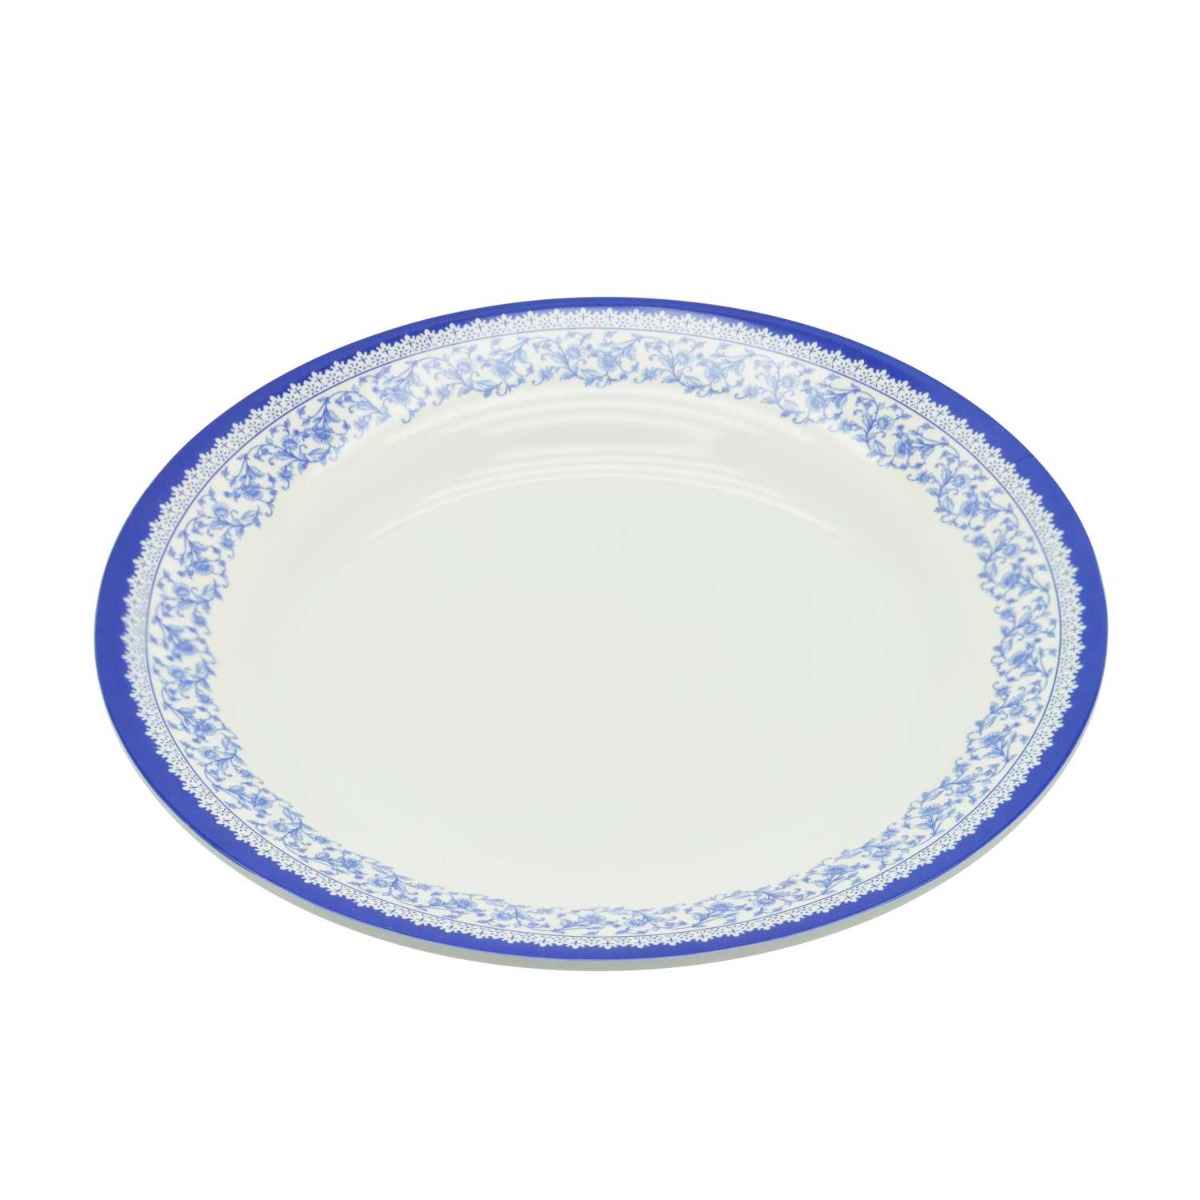 Rk Melamine Soup Plate